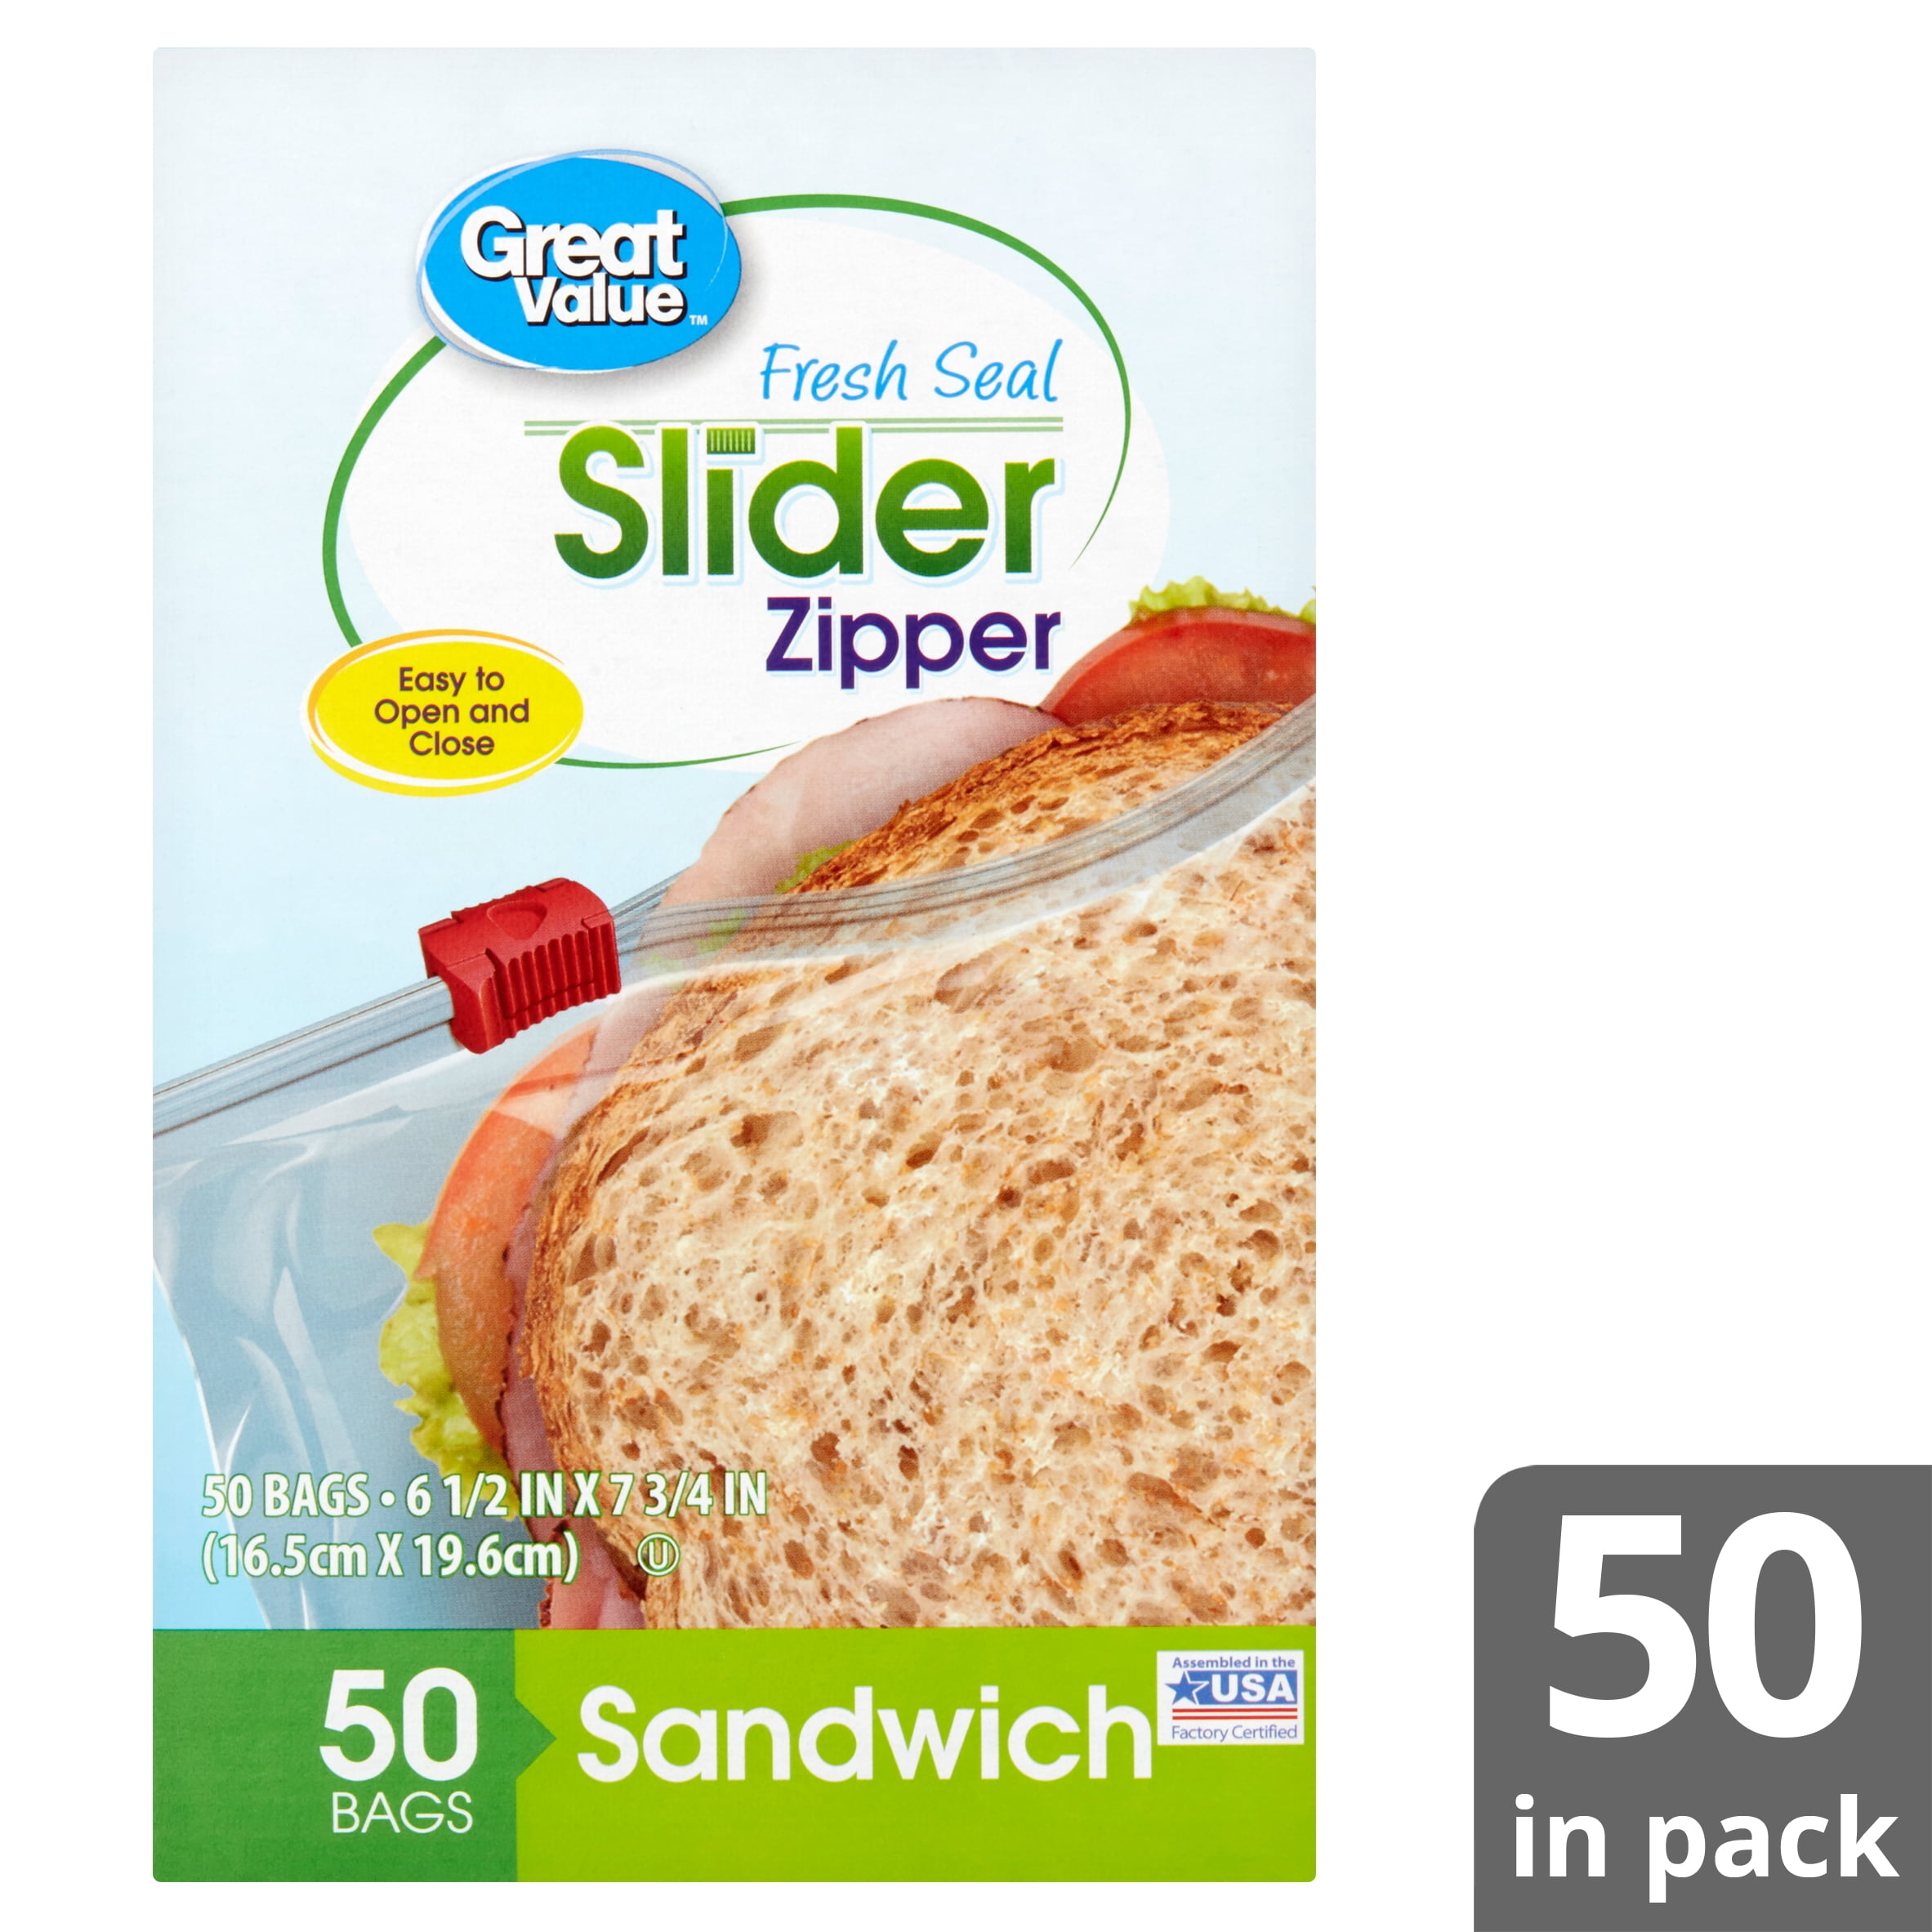 Great Value Slider Zipper Sandwich Bags, 50 Count